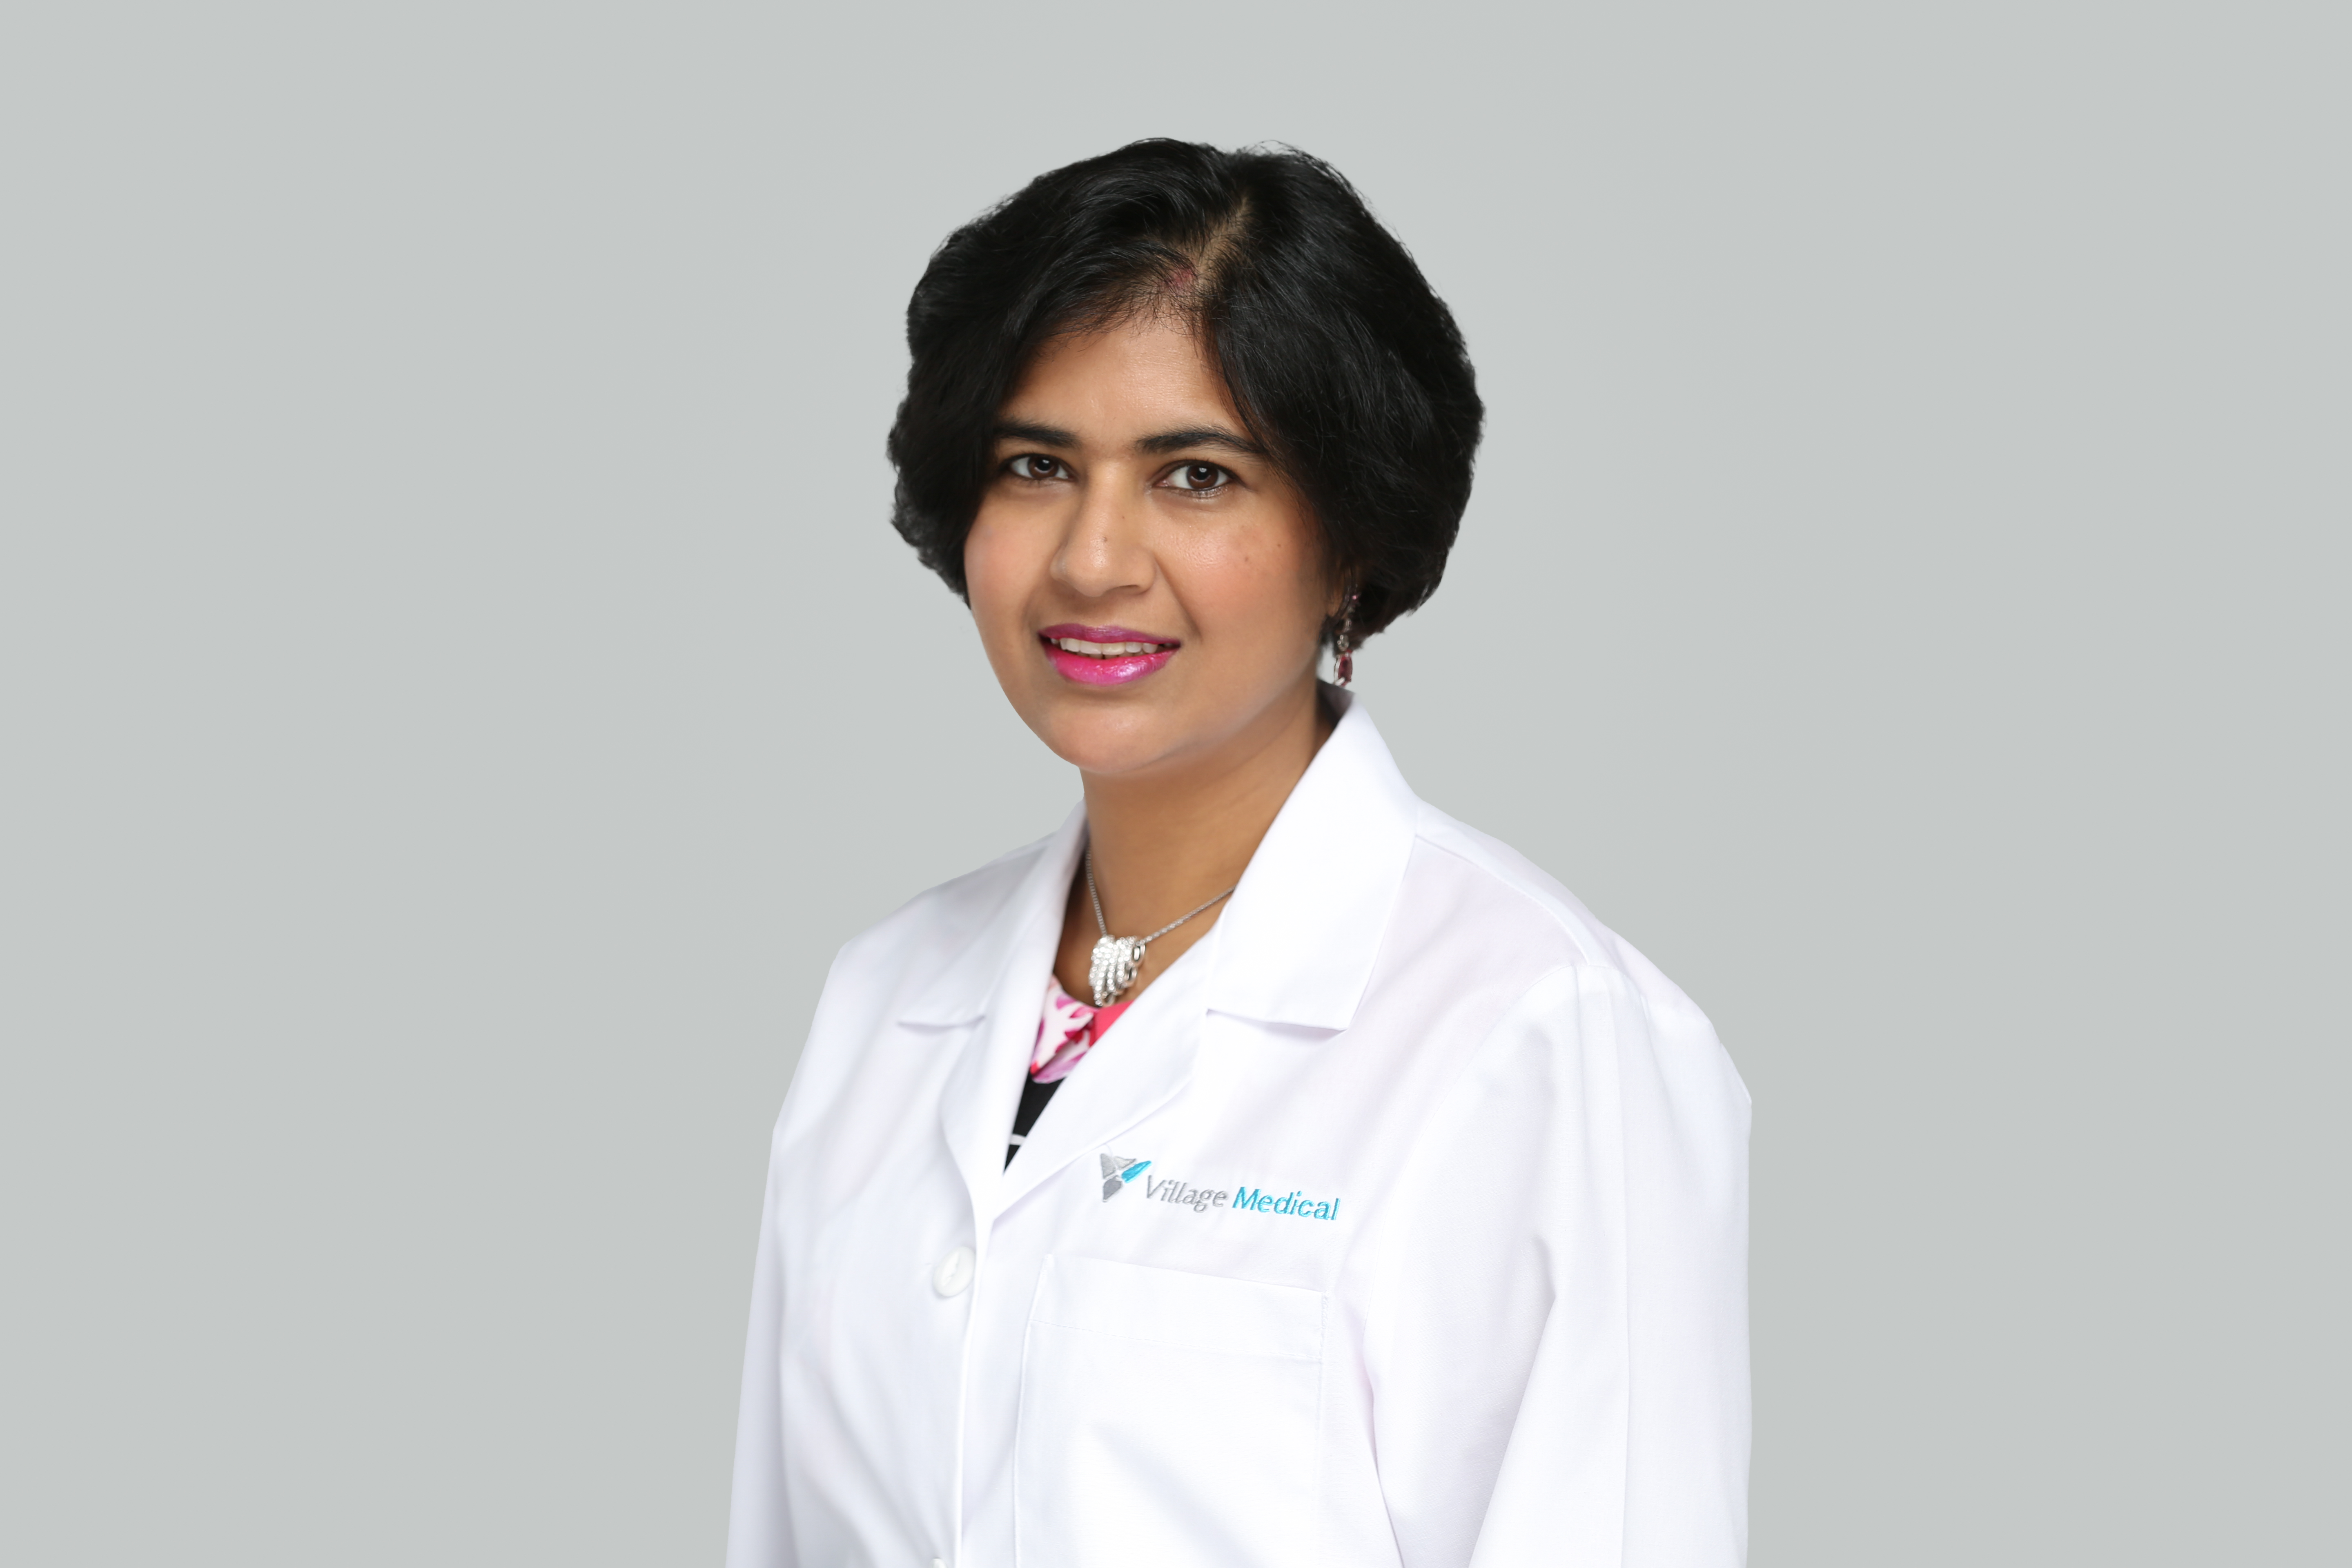 Professional headshot of Supriya Gupta, MD